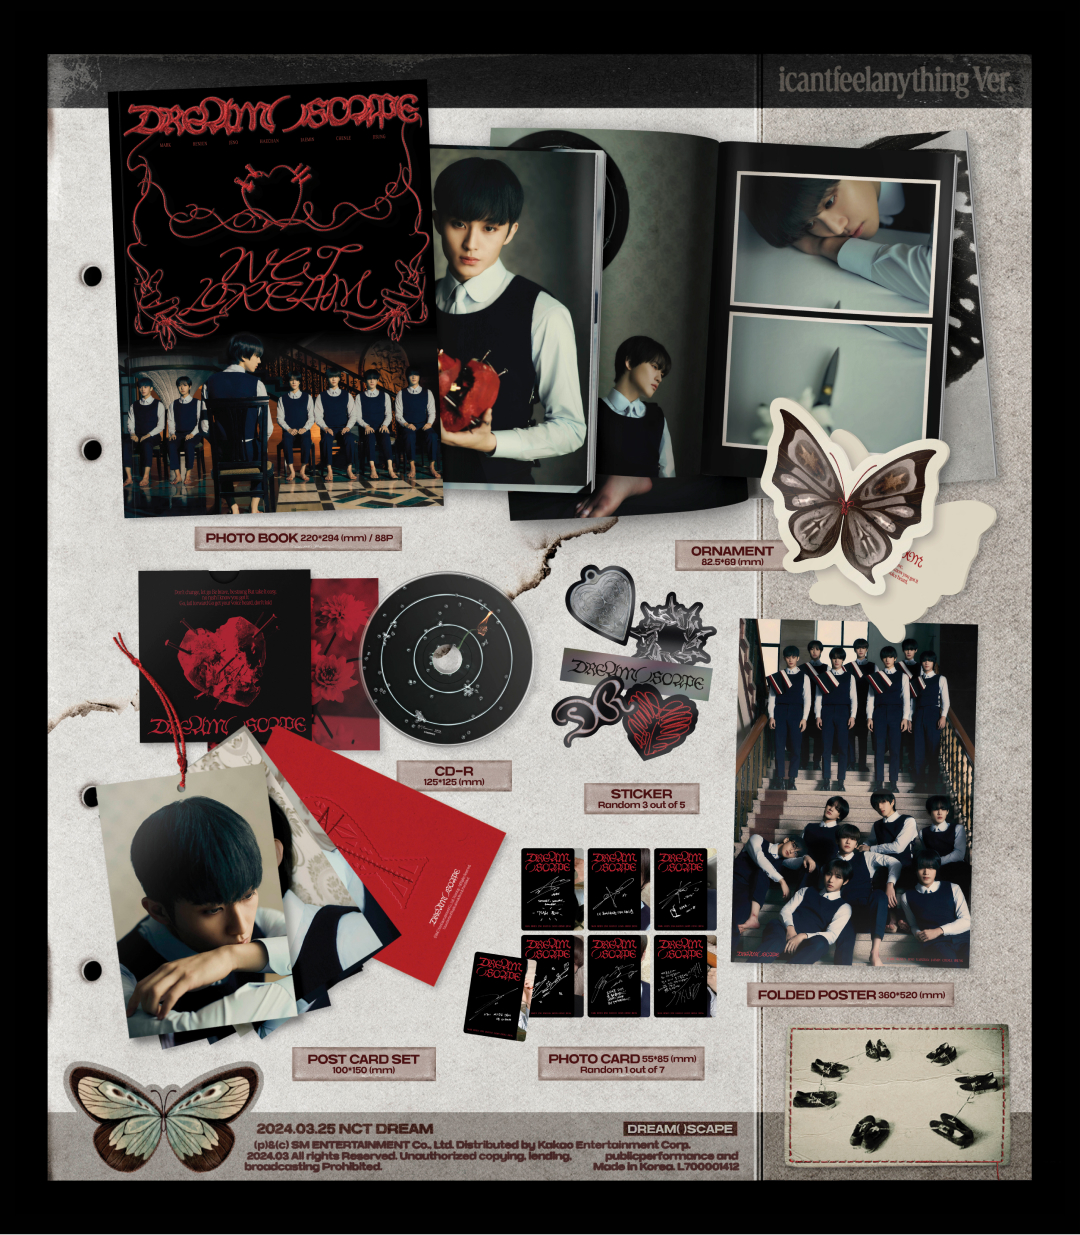 NCT DREAM - 5th Mini Album DREAM( )SCAPE (Photobook Ver.)